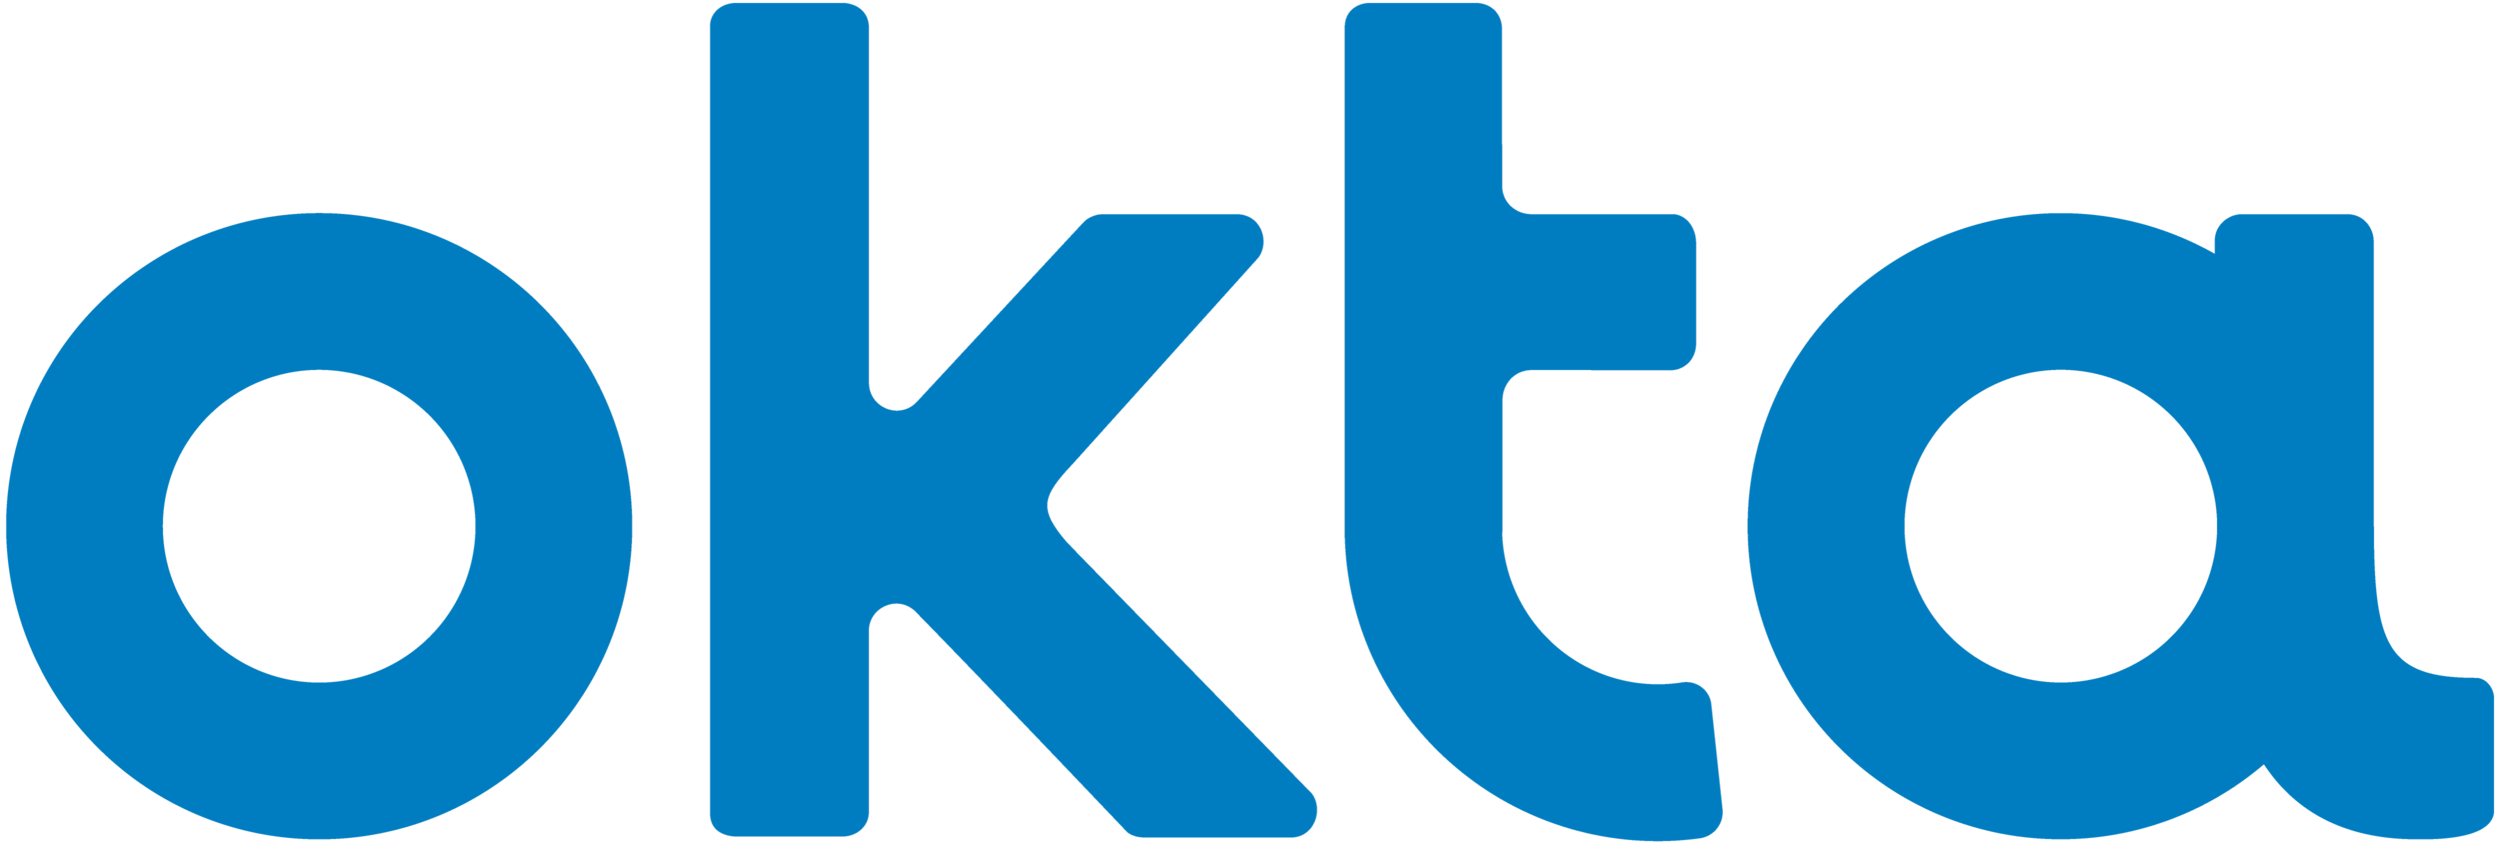 okta-logo.png